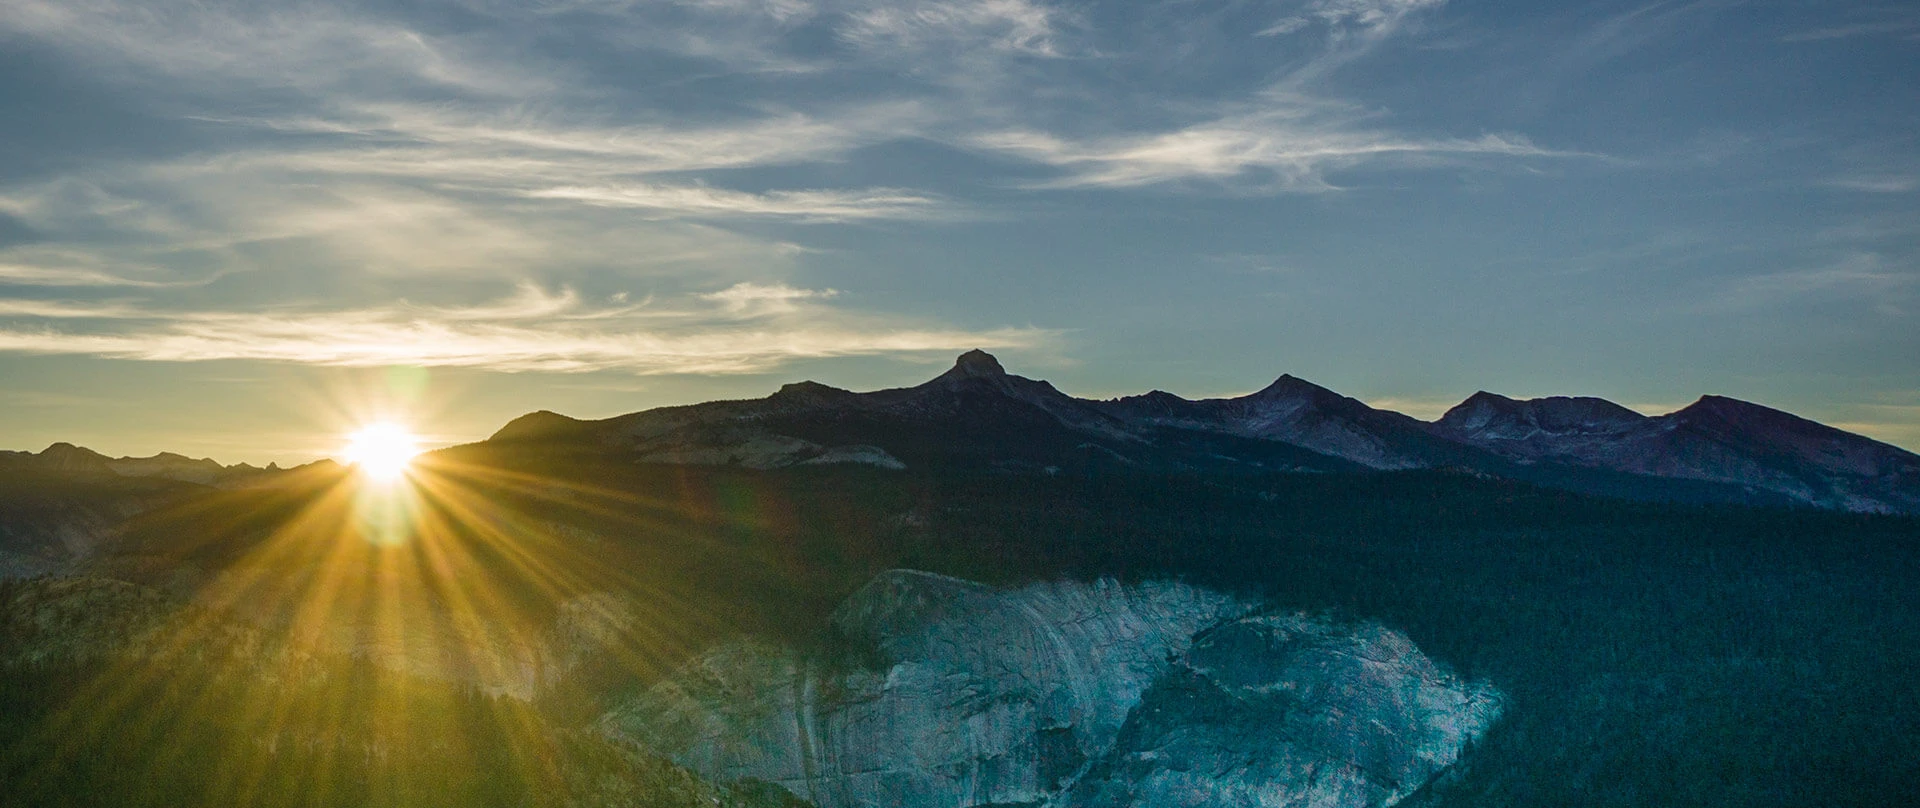 Yosemite skyline at sunrise